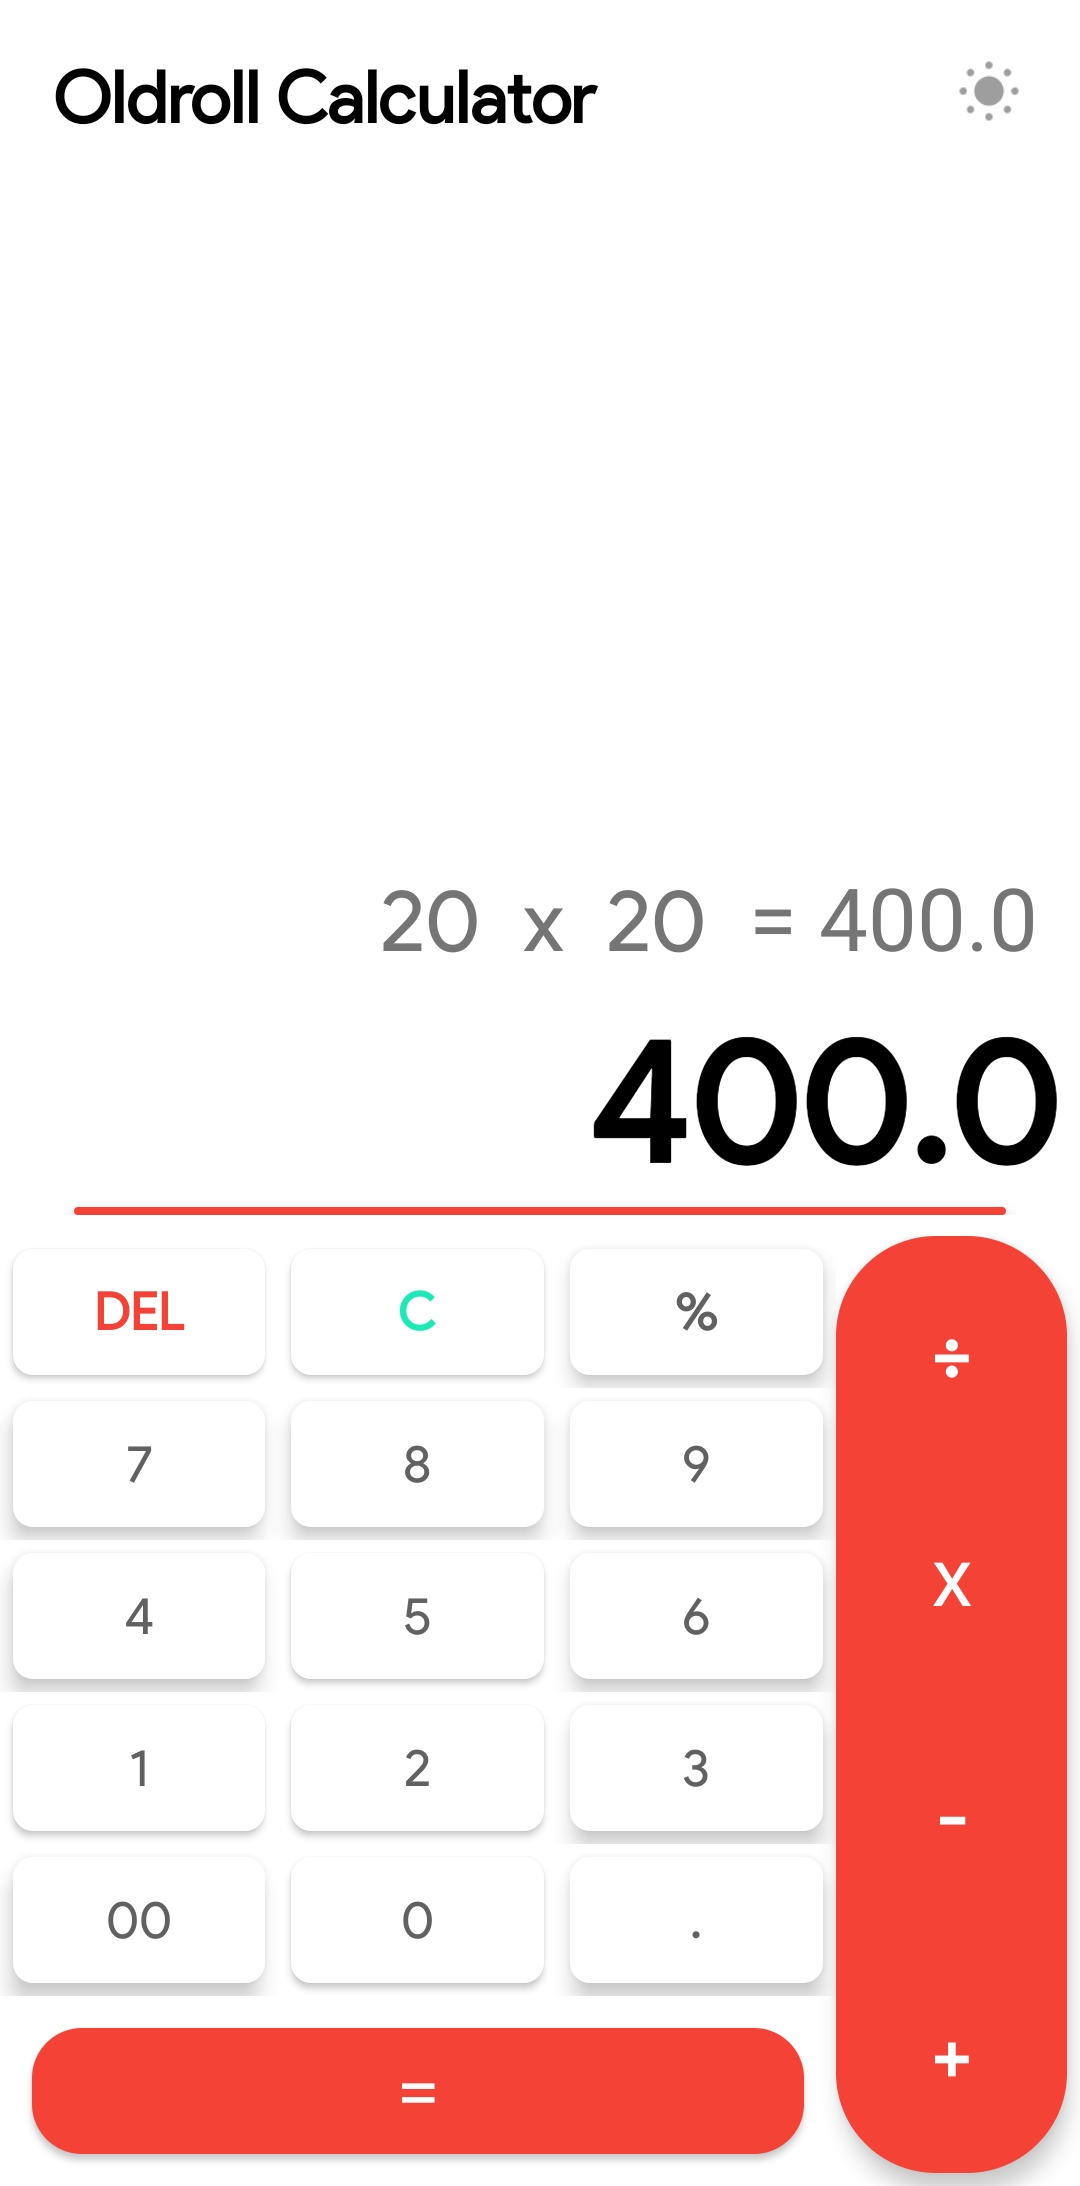 Oldroll Calculator